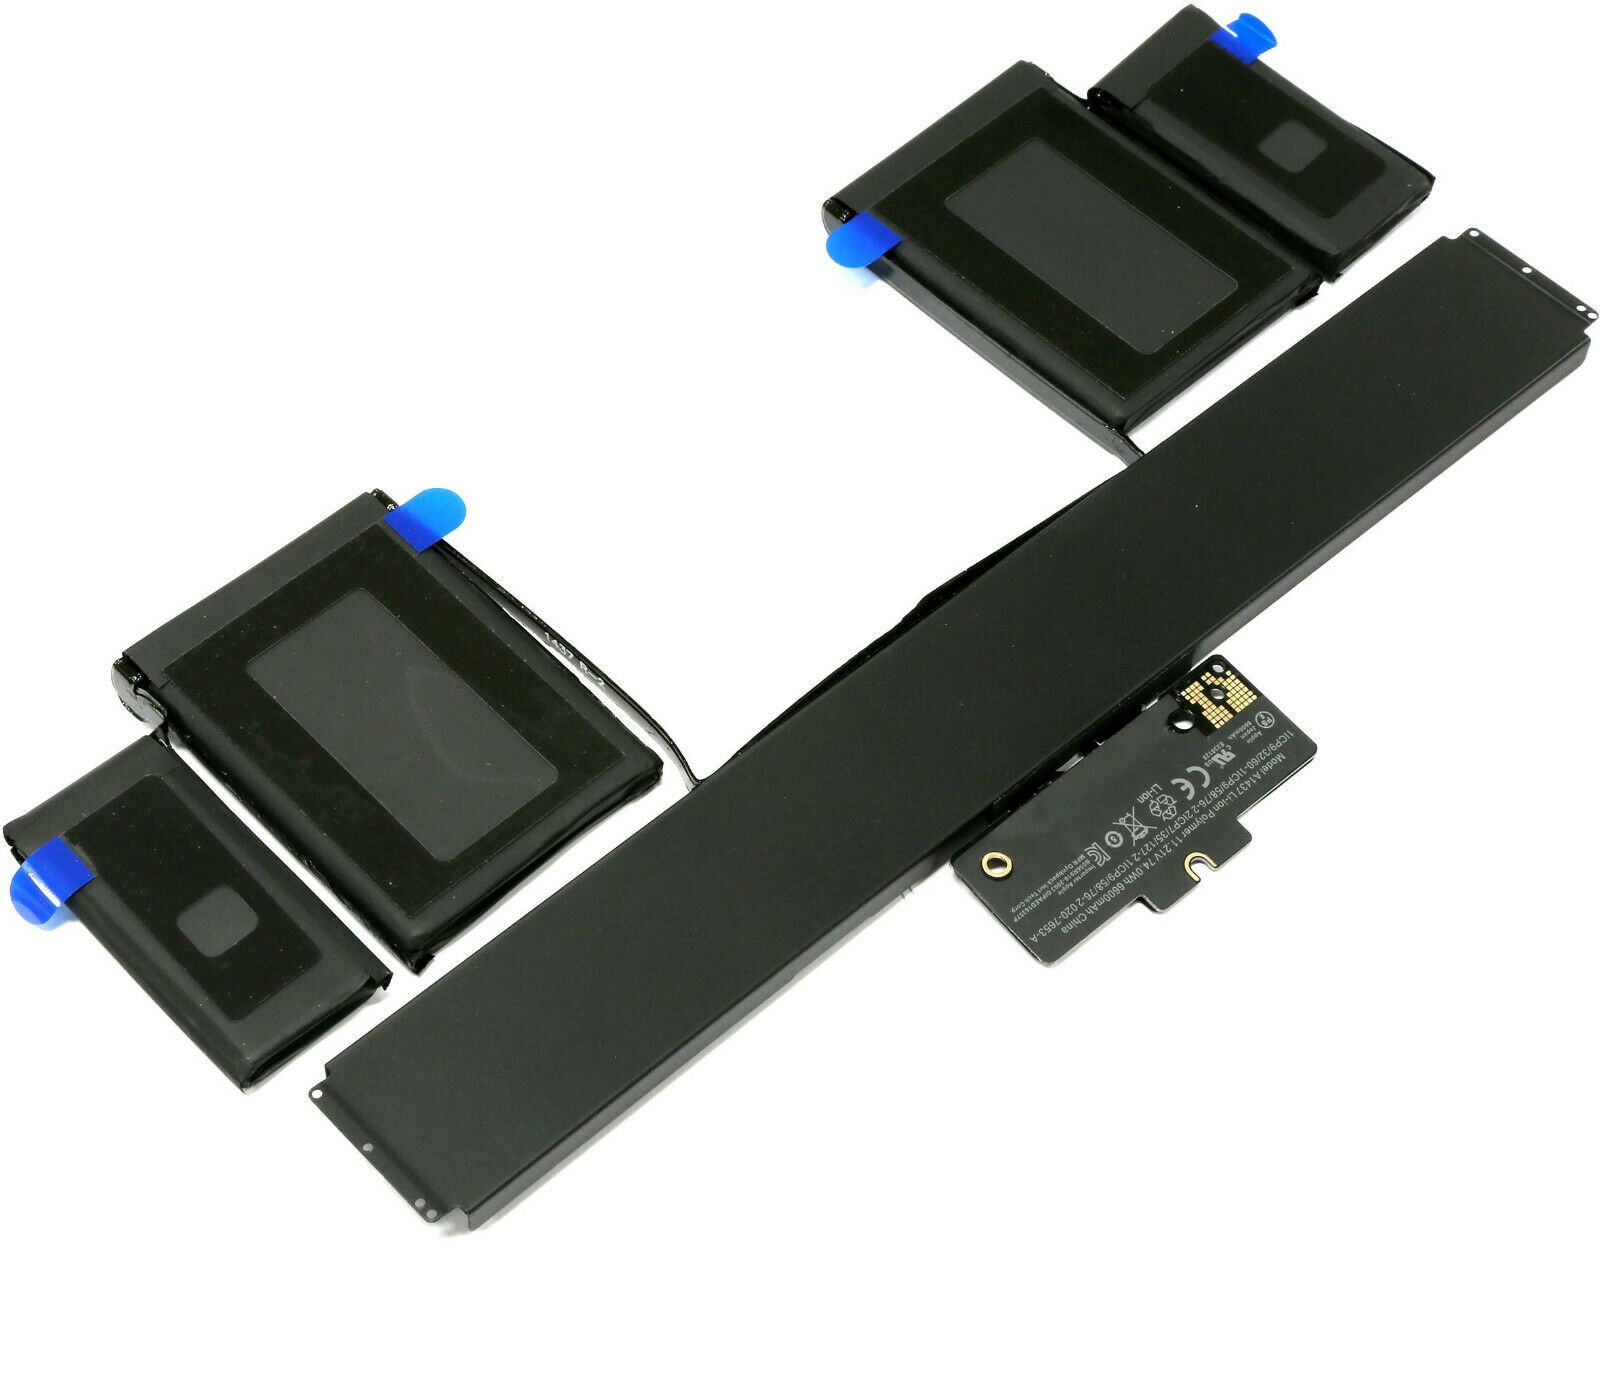 Batteri til A1437 A1425 APPLE MacBook Pro 13 inch Retina Late 2012 Early 2013 (kompatibelt)